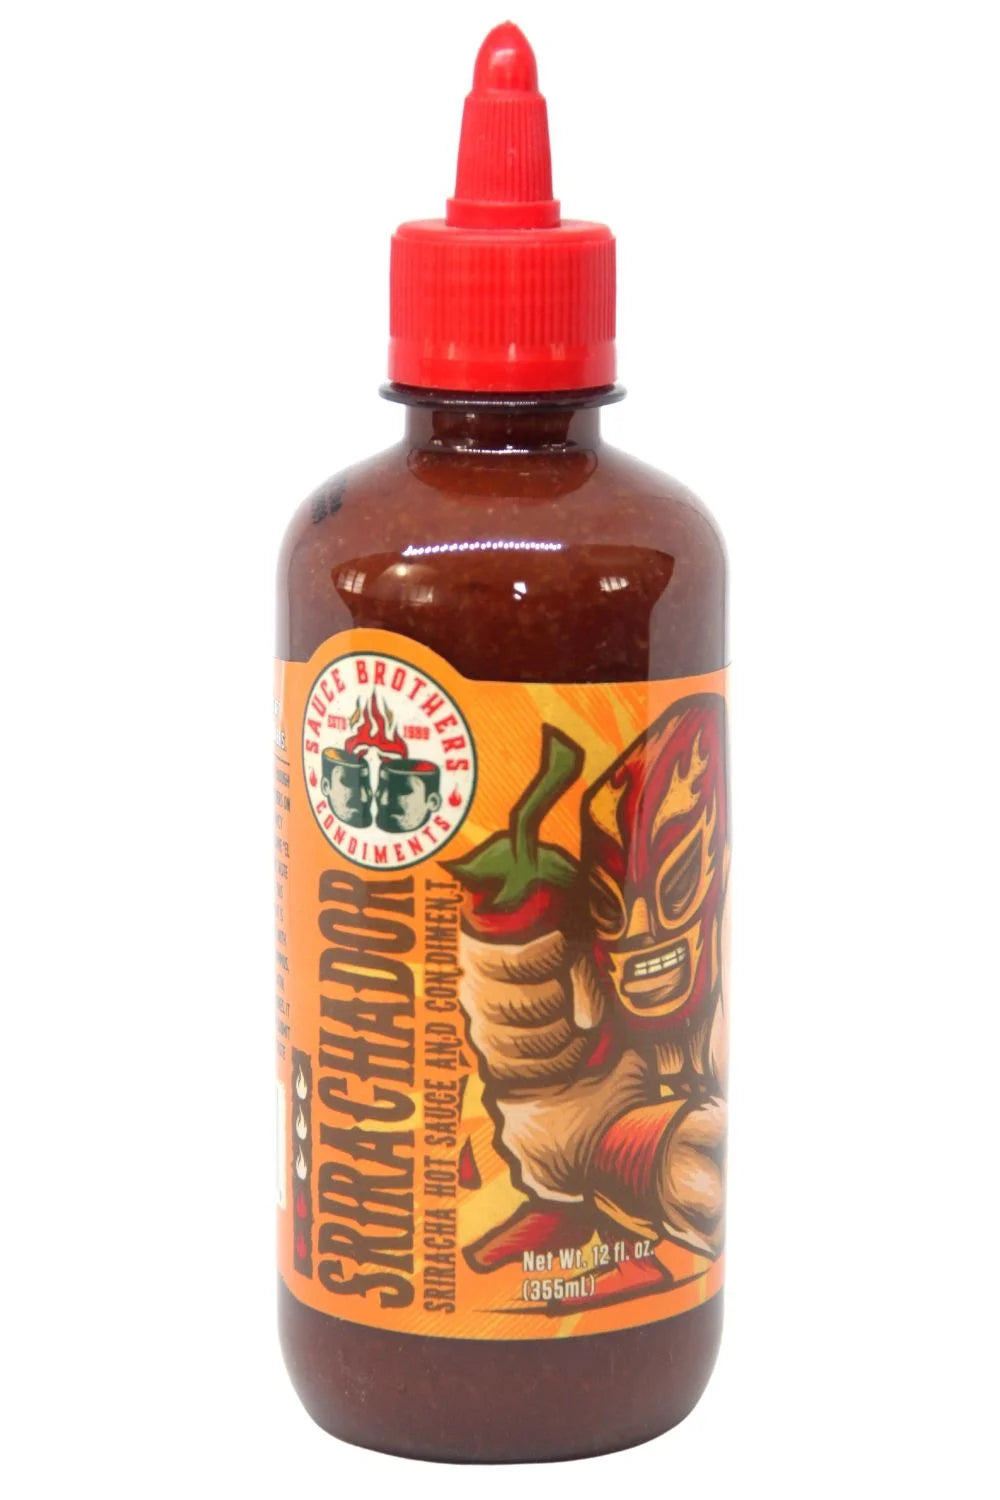 Sauce Brothers Srirachador Sriracha Hot Sauce and Condiment - 12oz Bottle